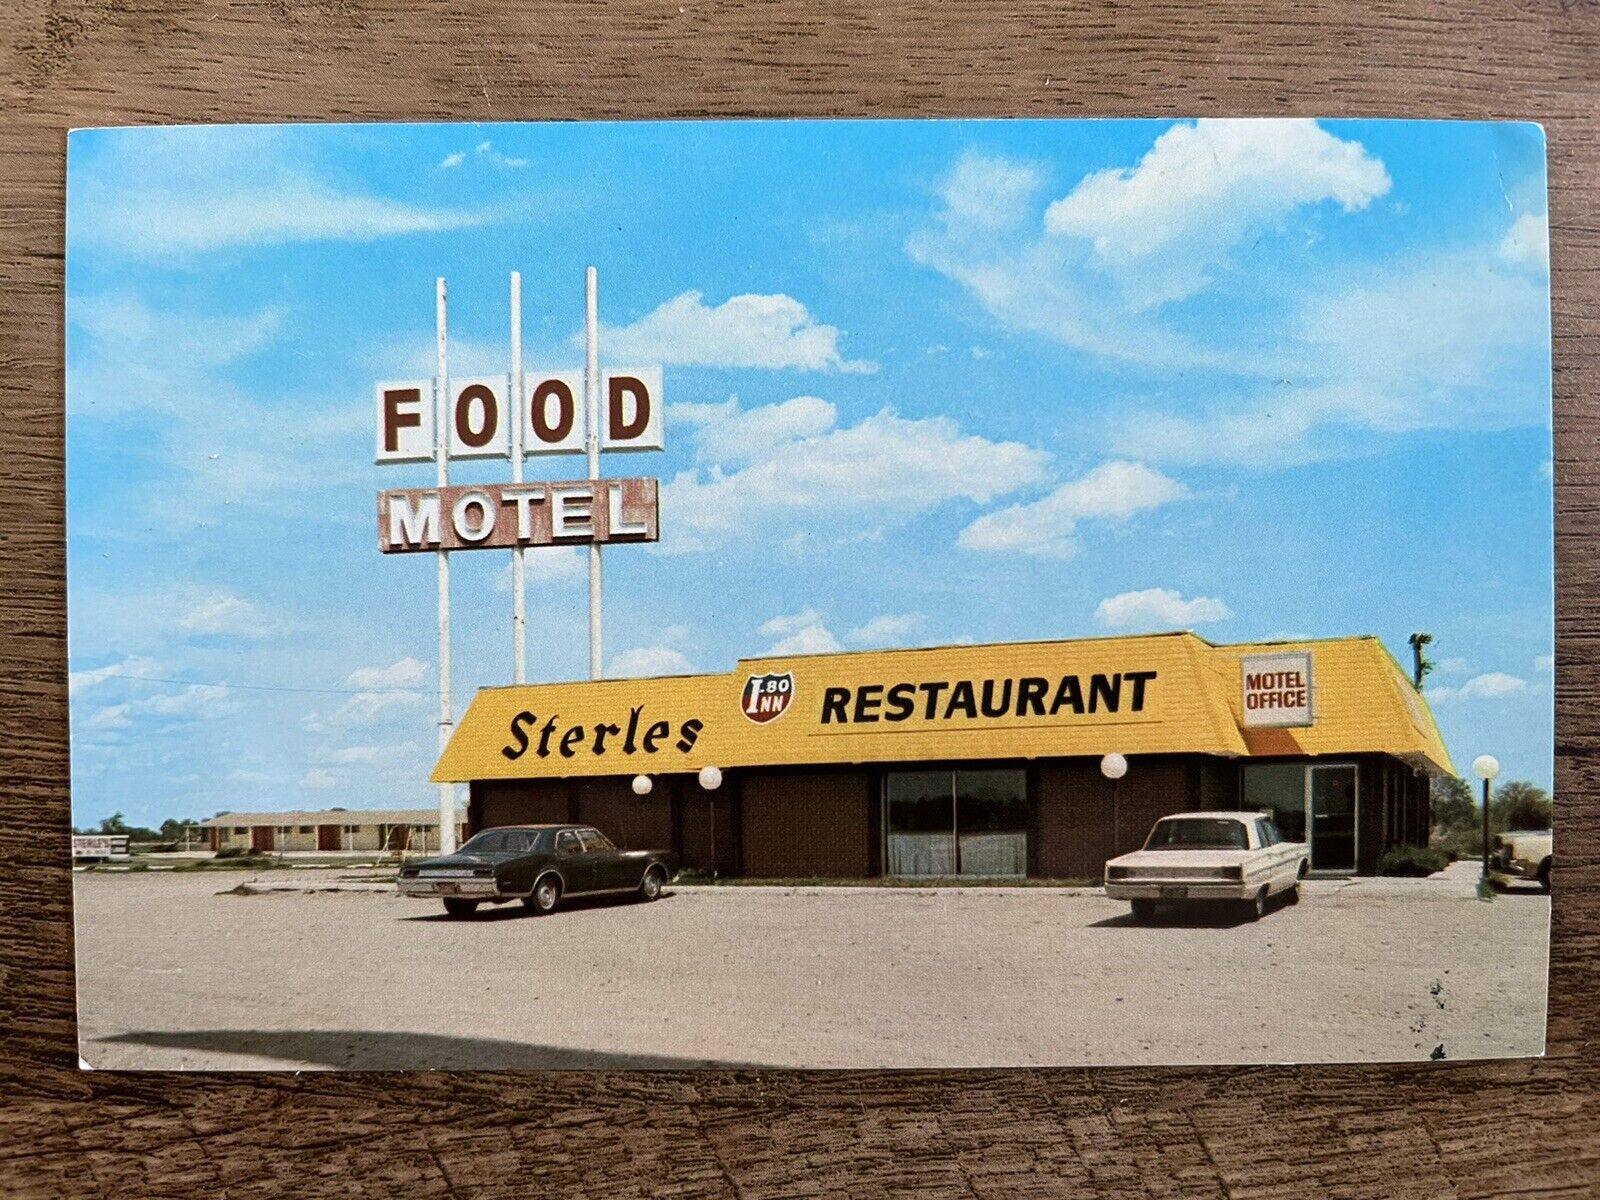 Sterle’s I-80 Inn Motel, Gibbon, Buffalo Co, NE - Antique Postcard